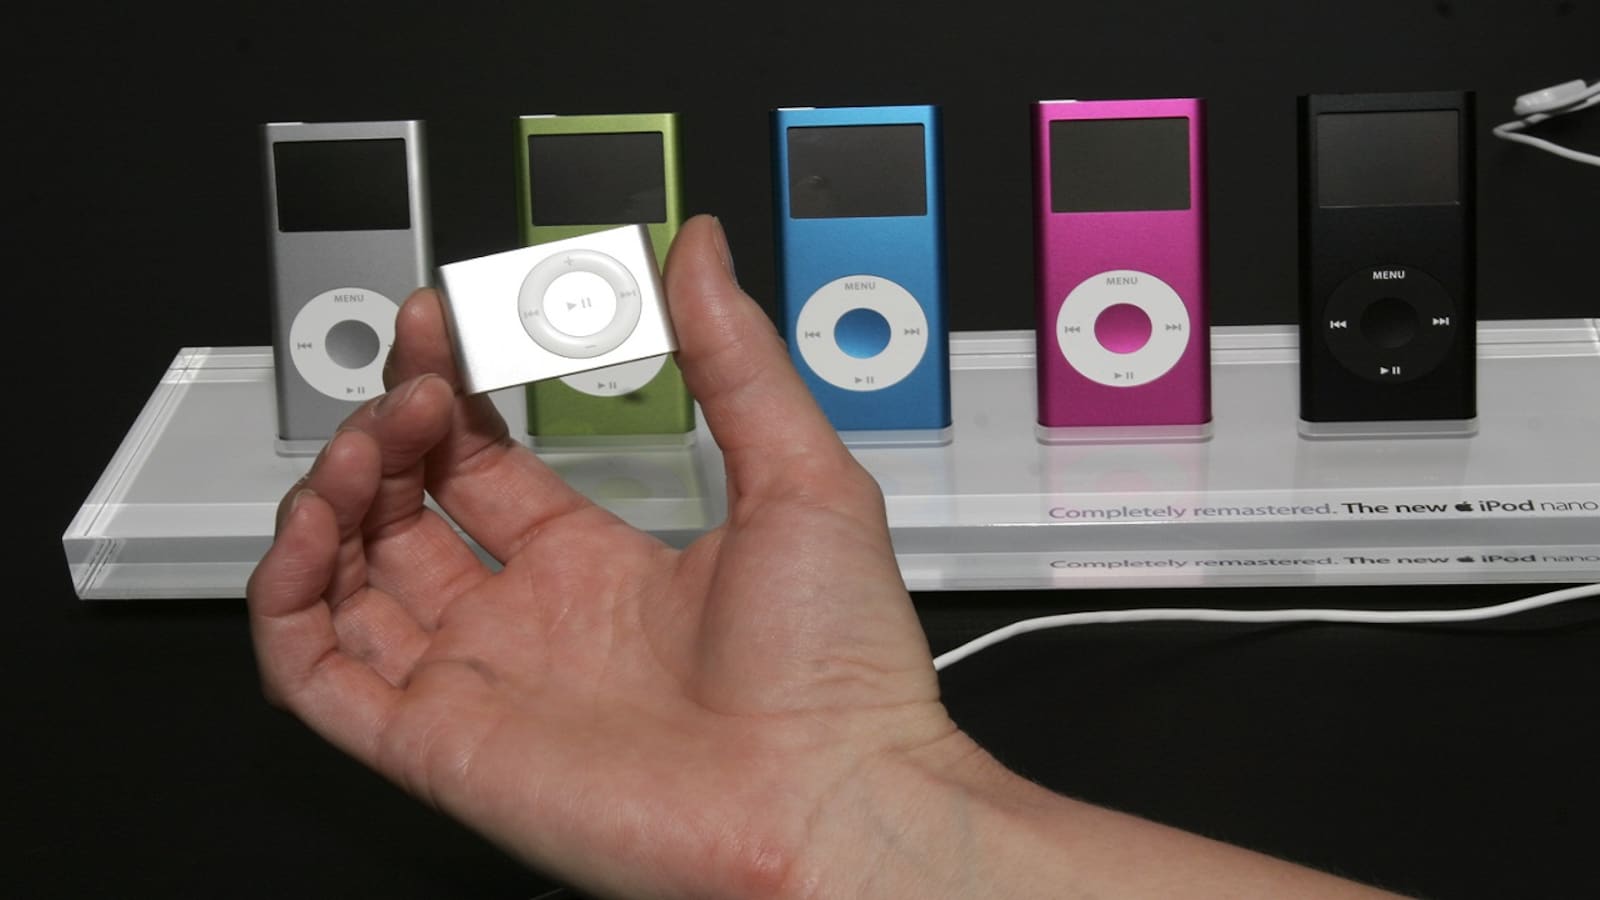 Apple to discontinue iPod nano and shuffle